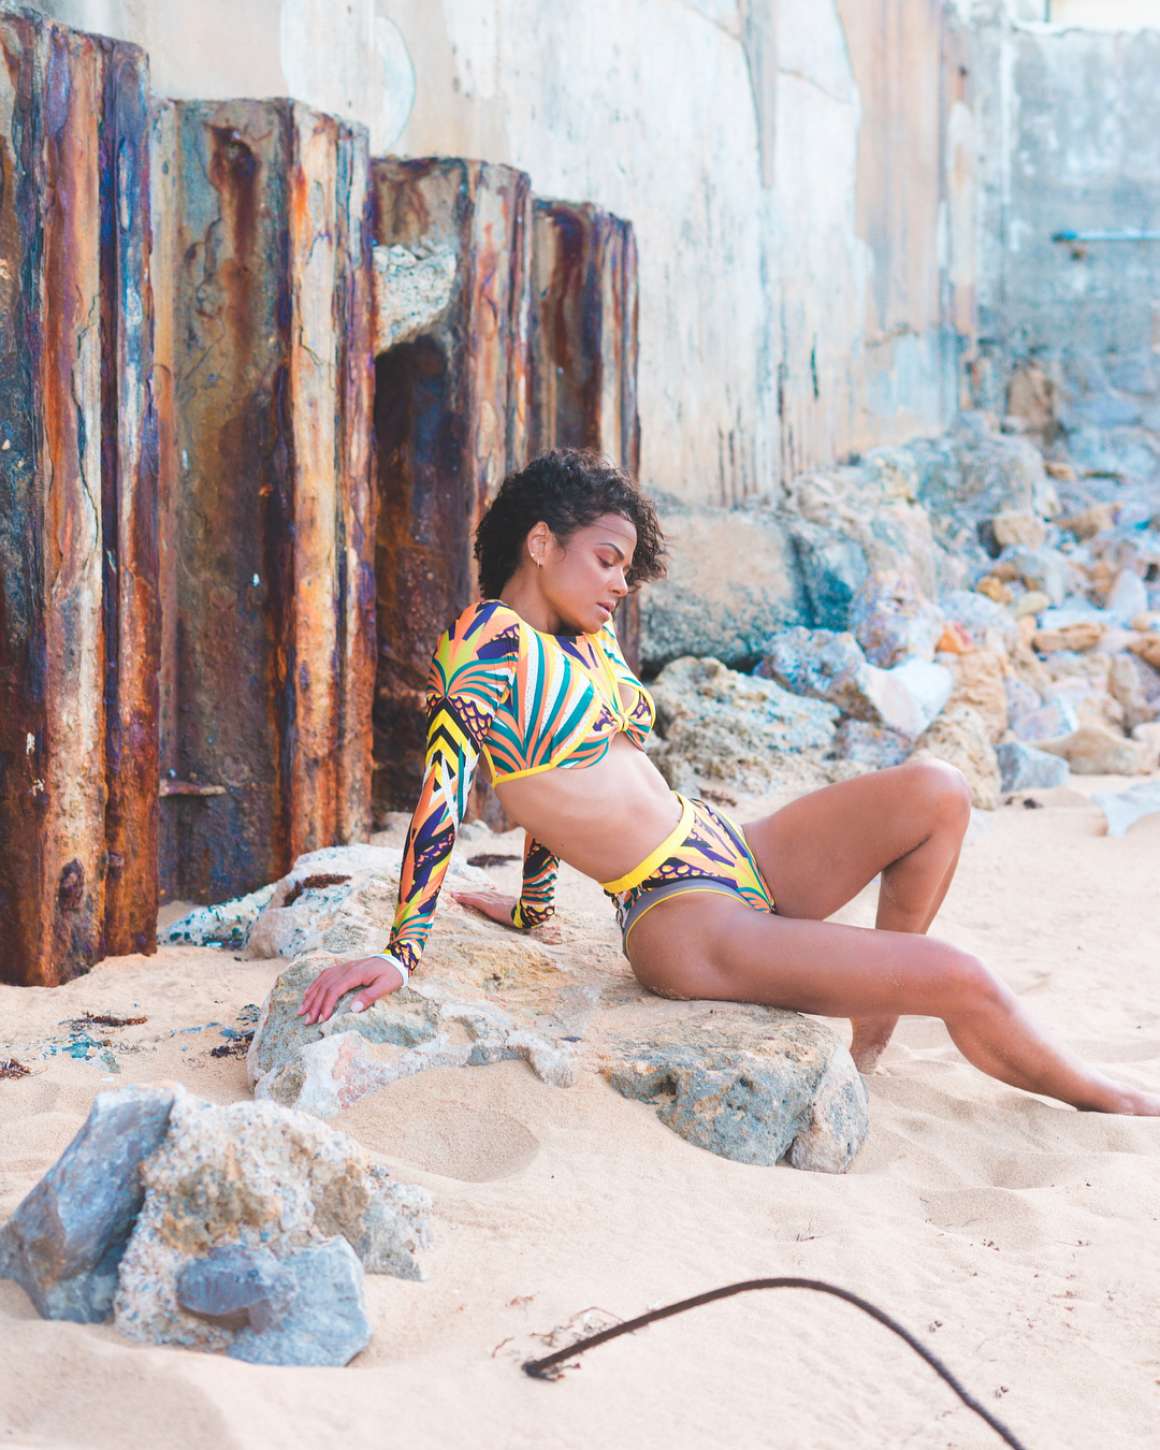 Christina Milian in Multi-colored Swimsuit â€“ Photoshoot